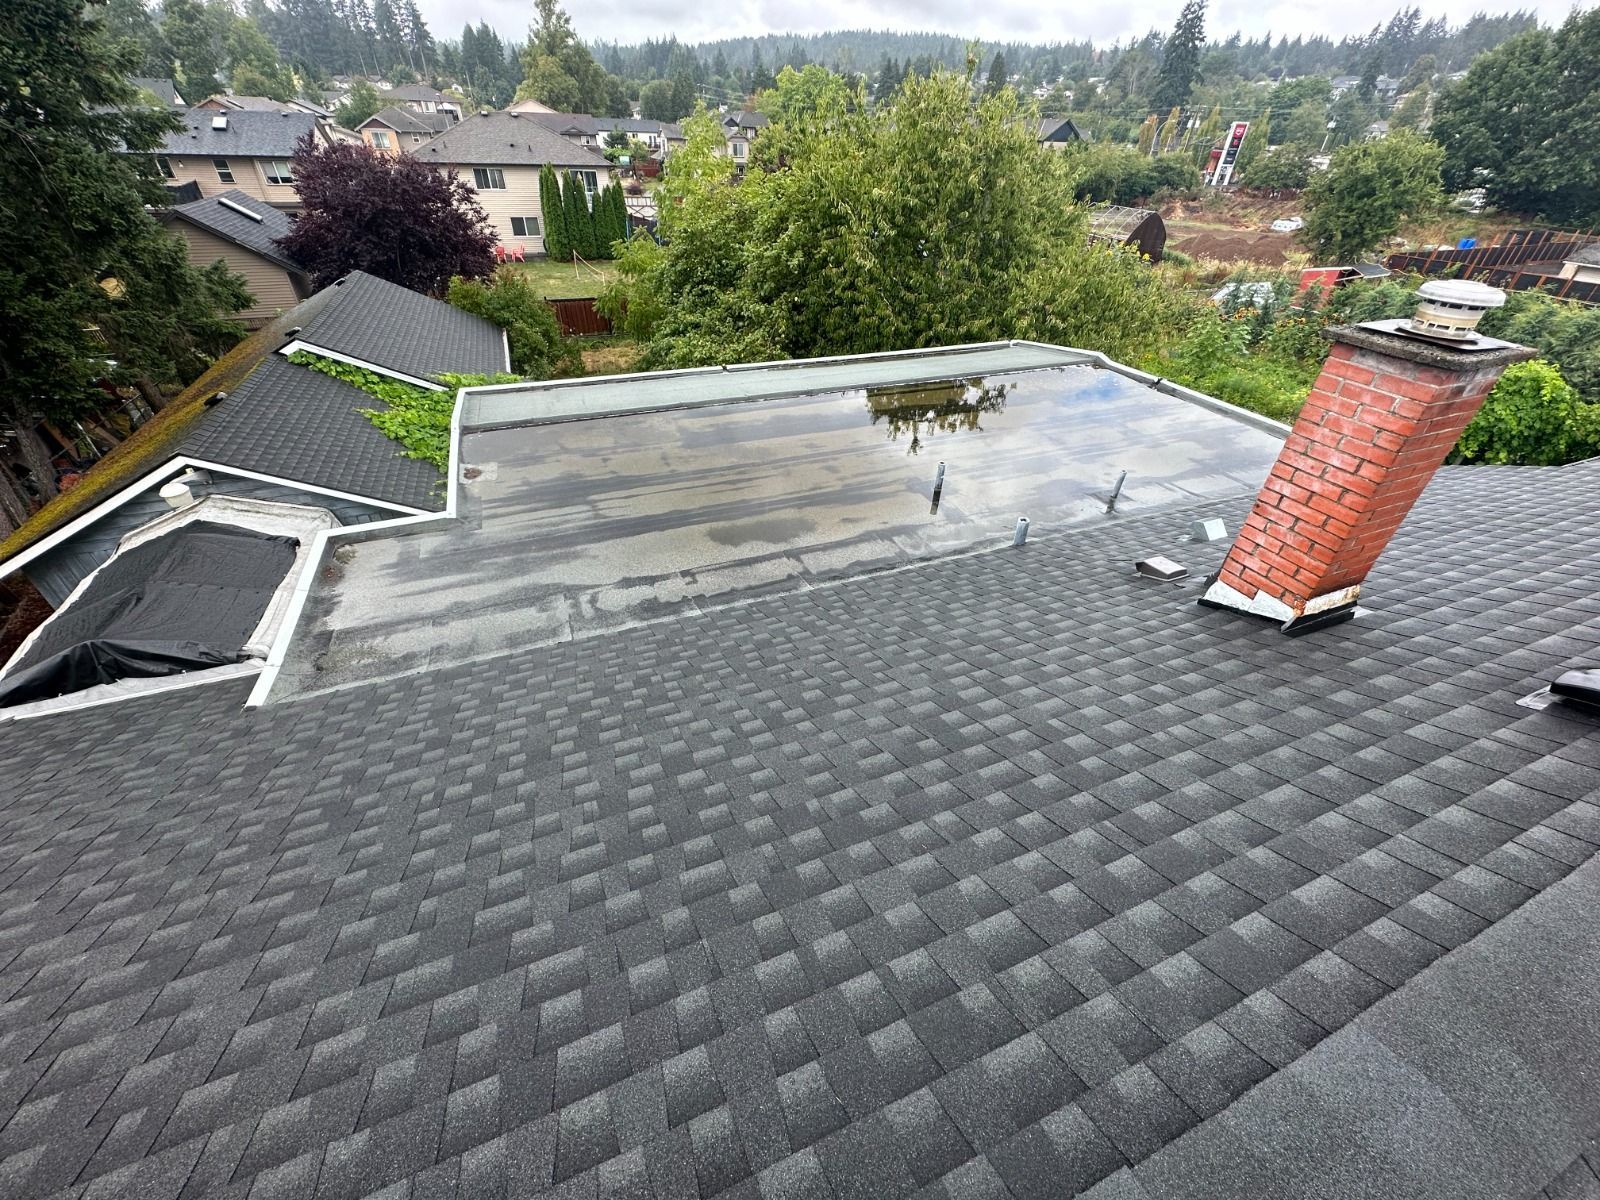 A skilled Vanderleek Roofing team member expertly installed this high end residential roof.